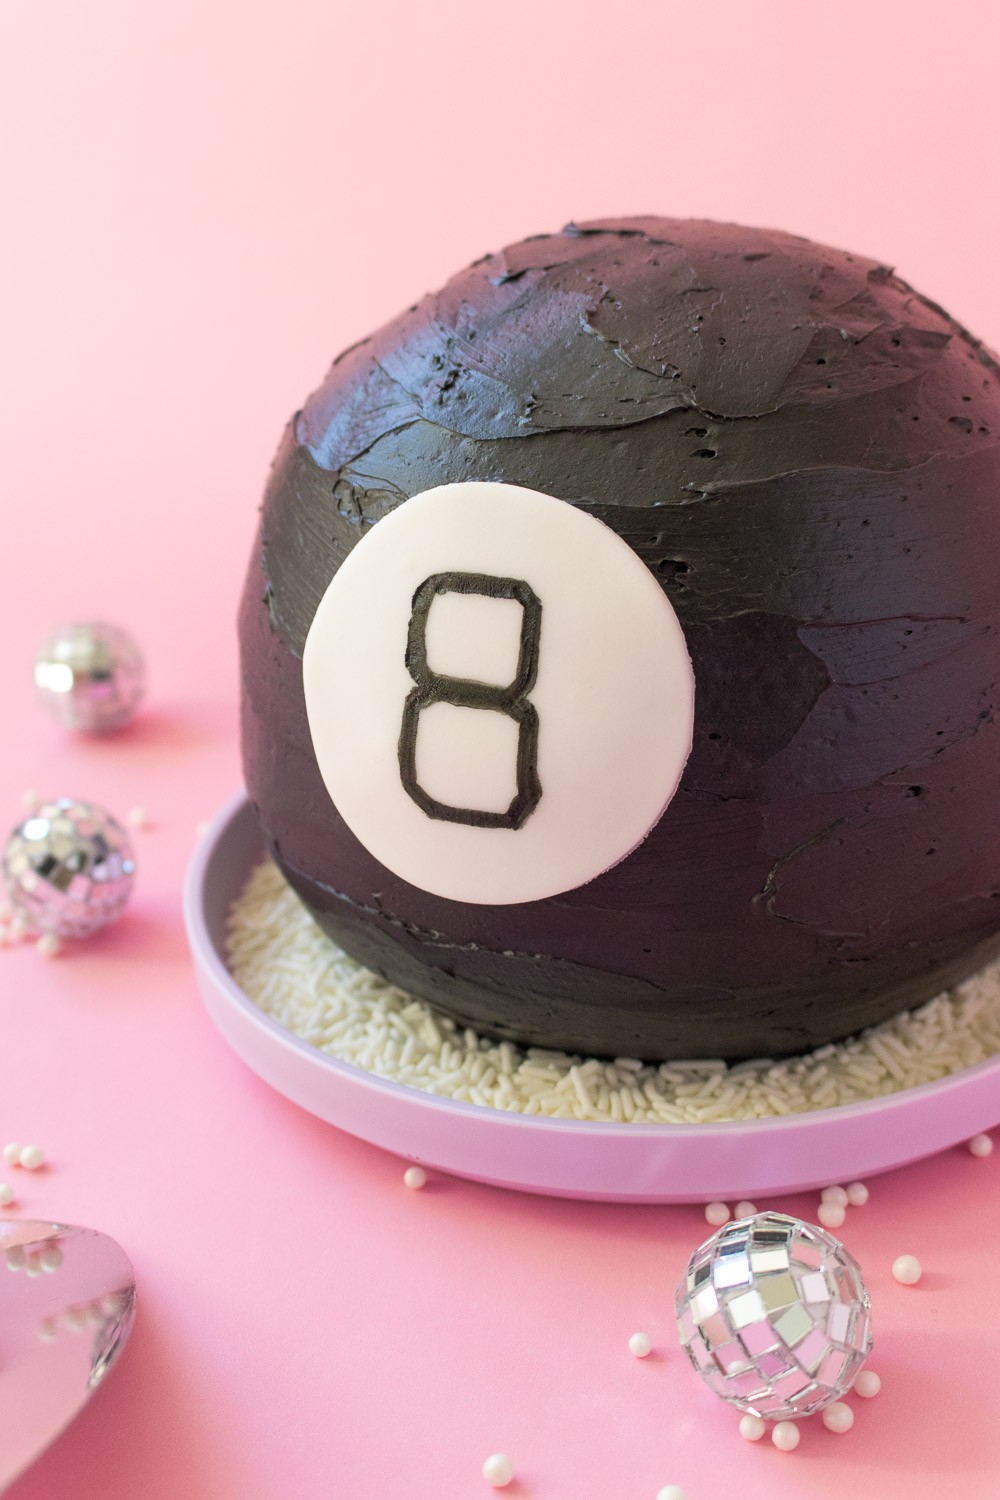 Magic 8 Ball Cake | Club Crafted